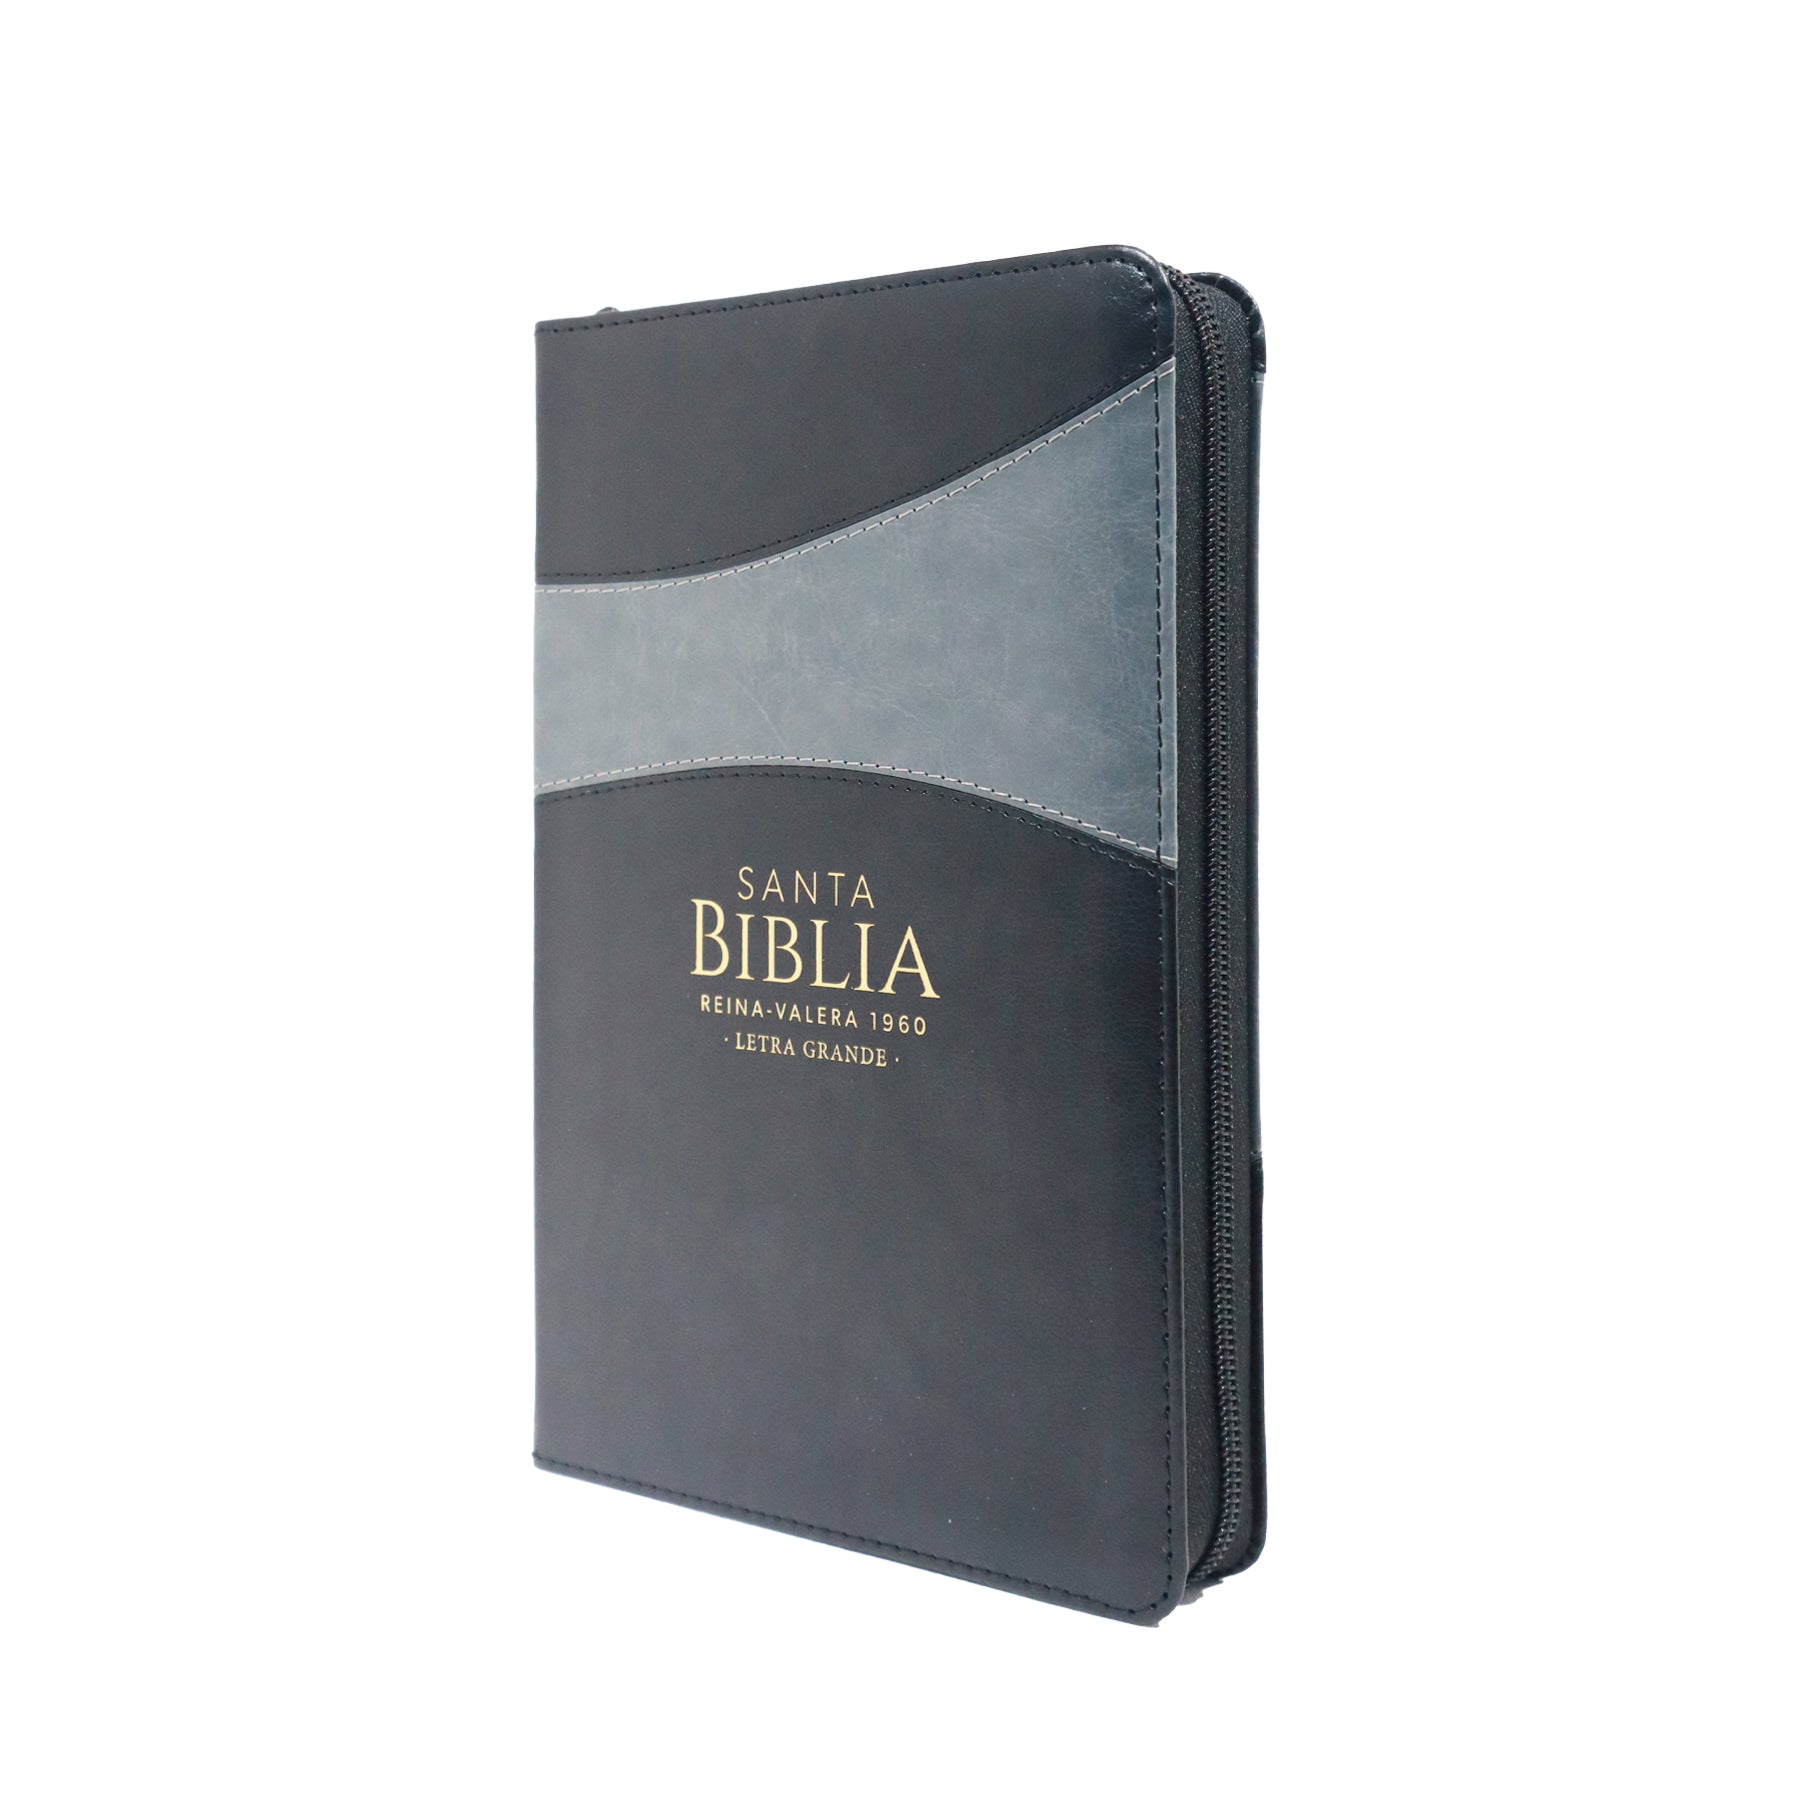 BIBLIA REINA VALERA 1960 LETRA GRANDE CLÁSICA BITONO NEGRO/GRIS INDICE